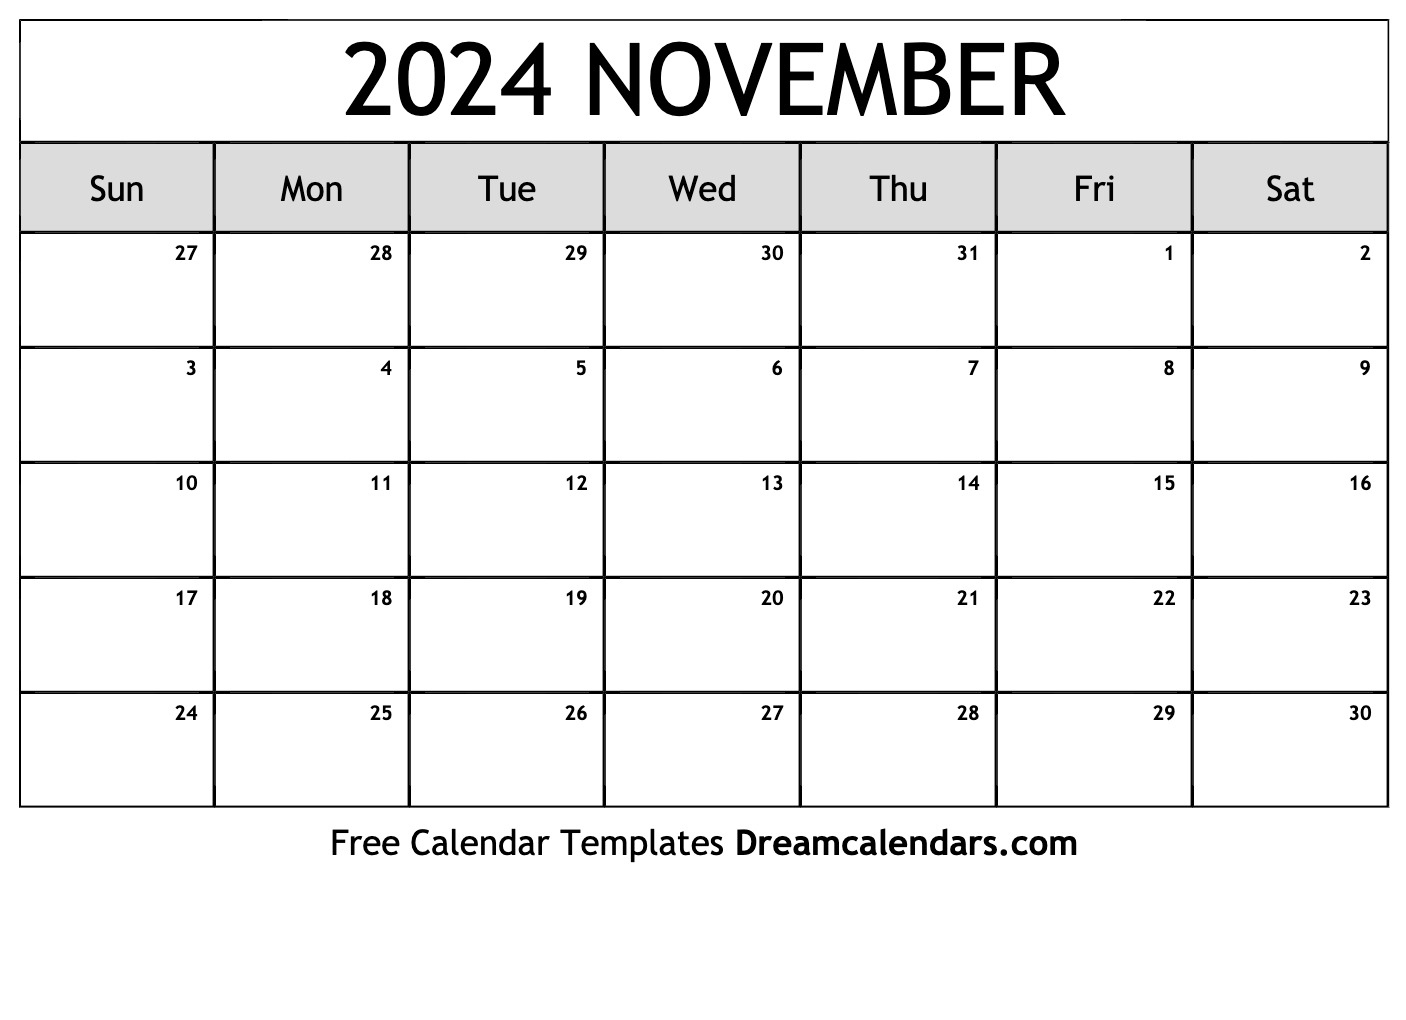 November 2024 Calendar | Free Blank Printable With Holidays inside Free Printable Calendar 2024 November December